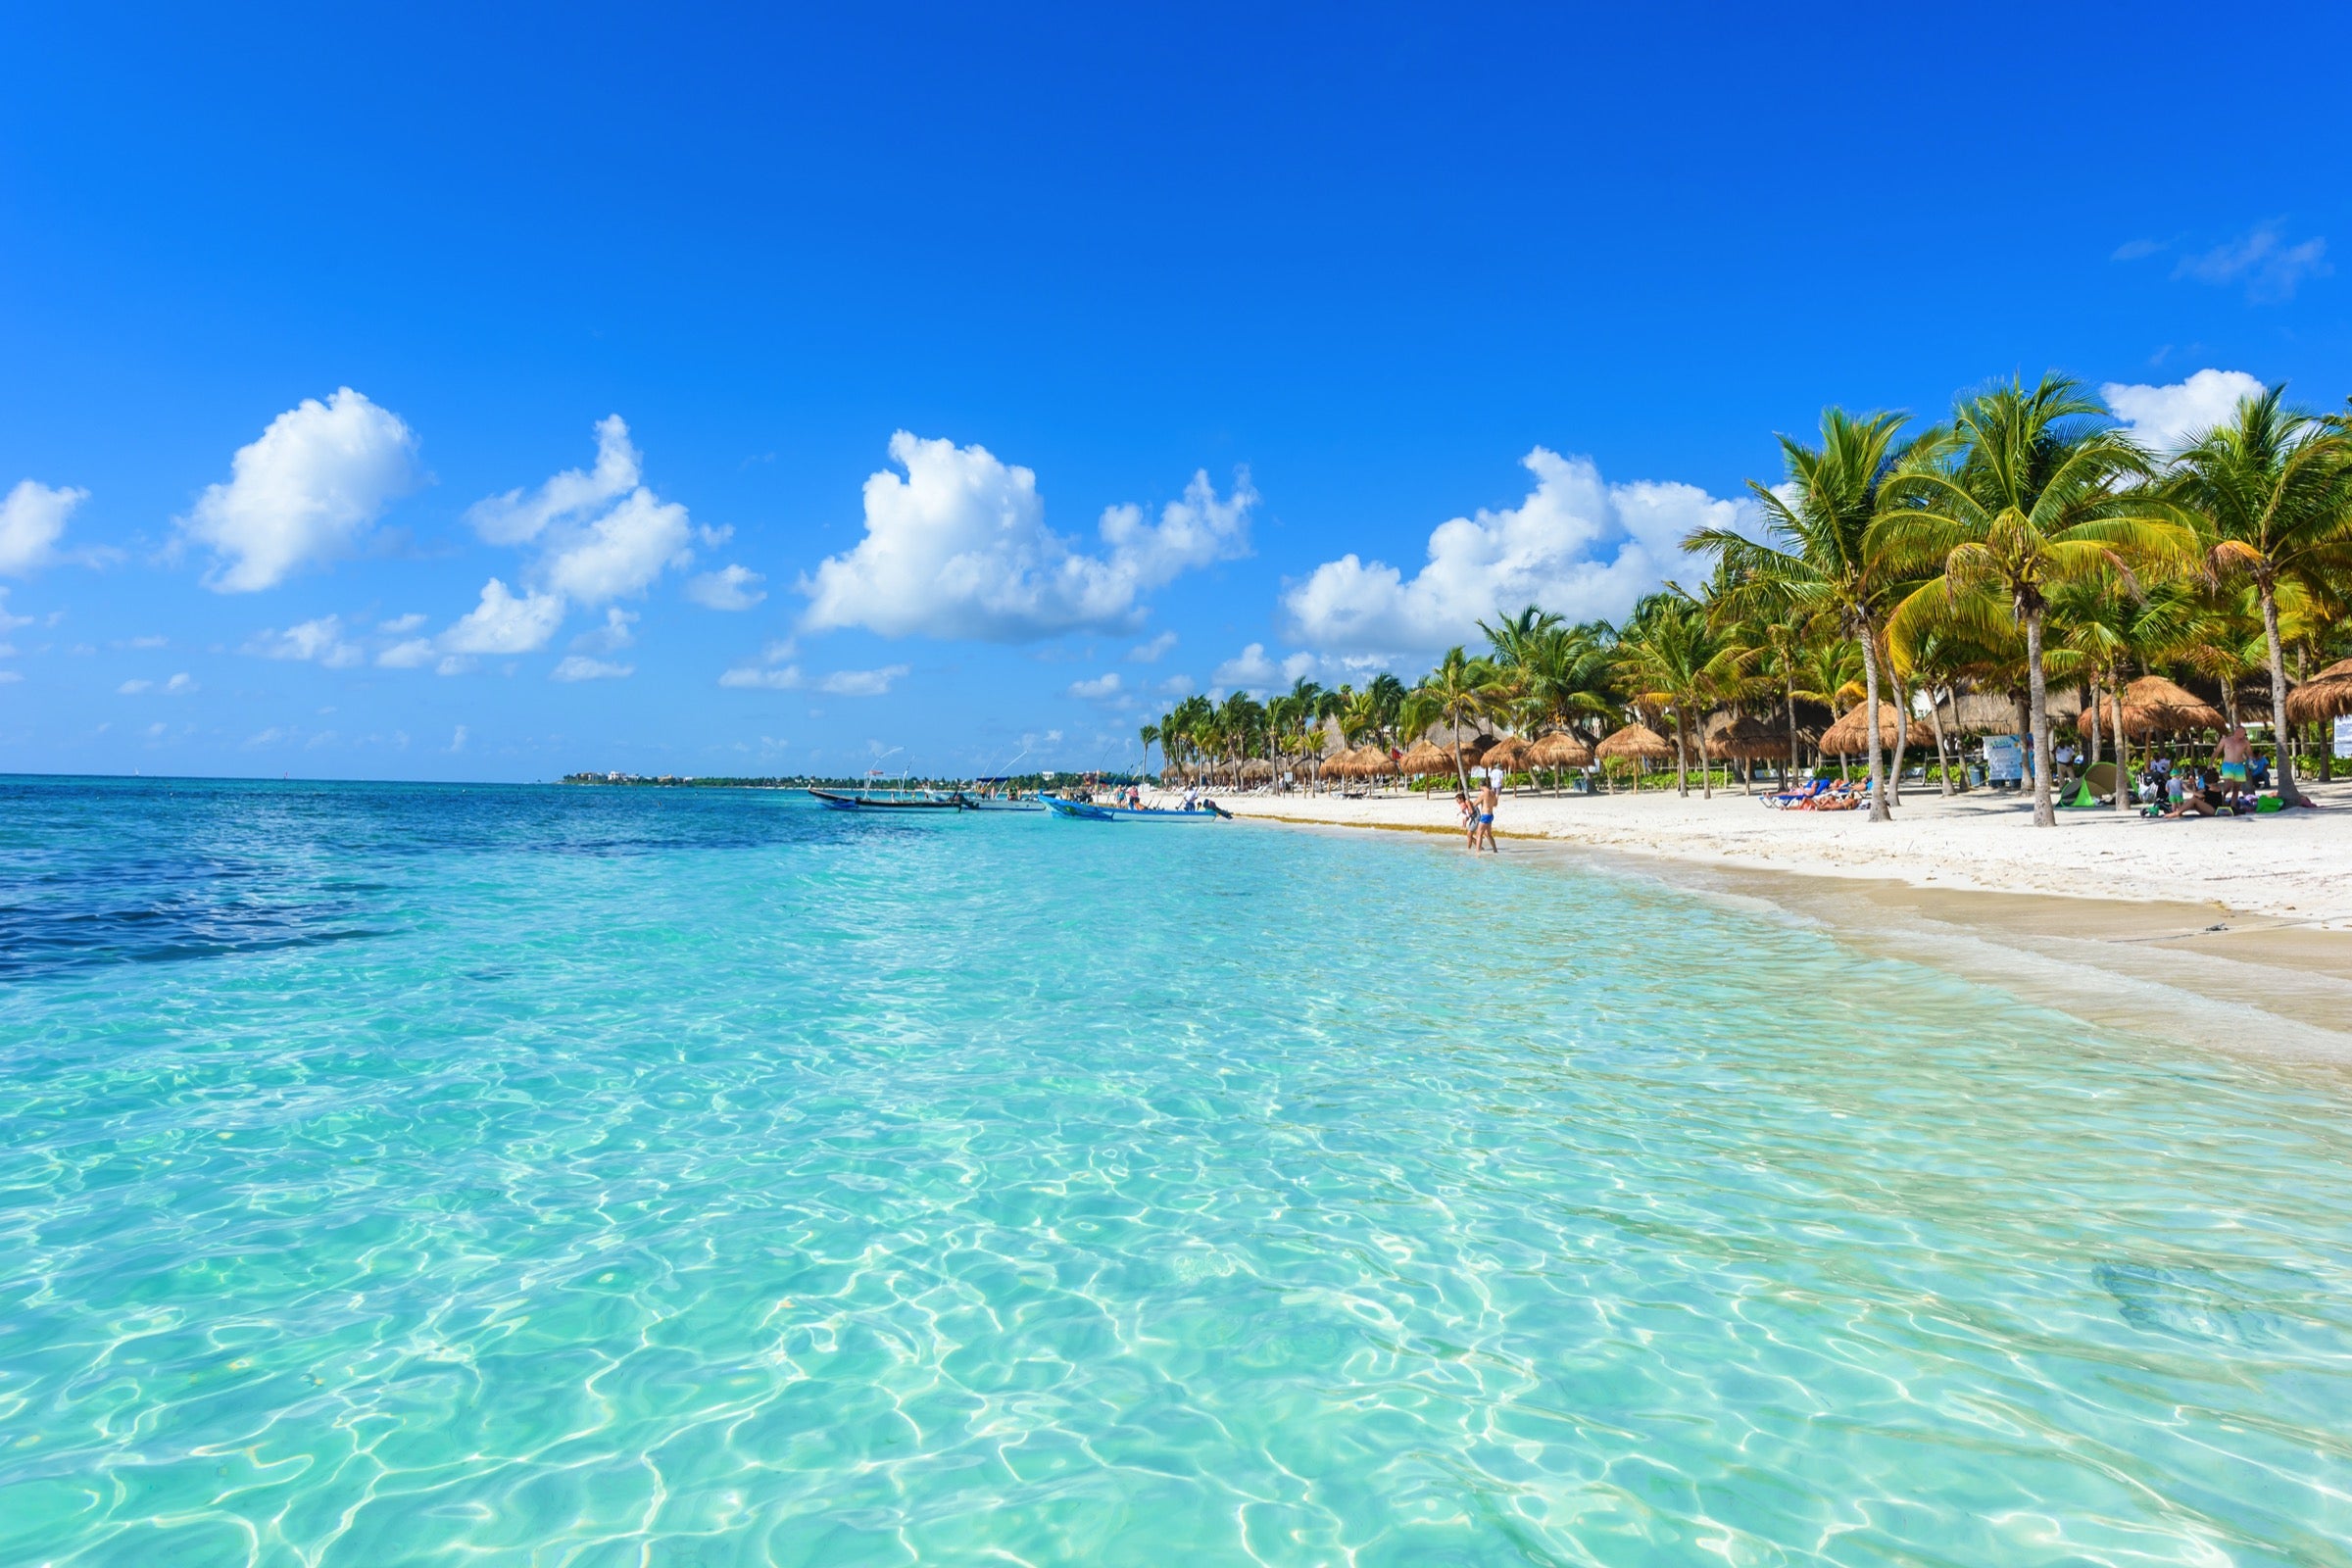 Photo of the Cancun coastline